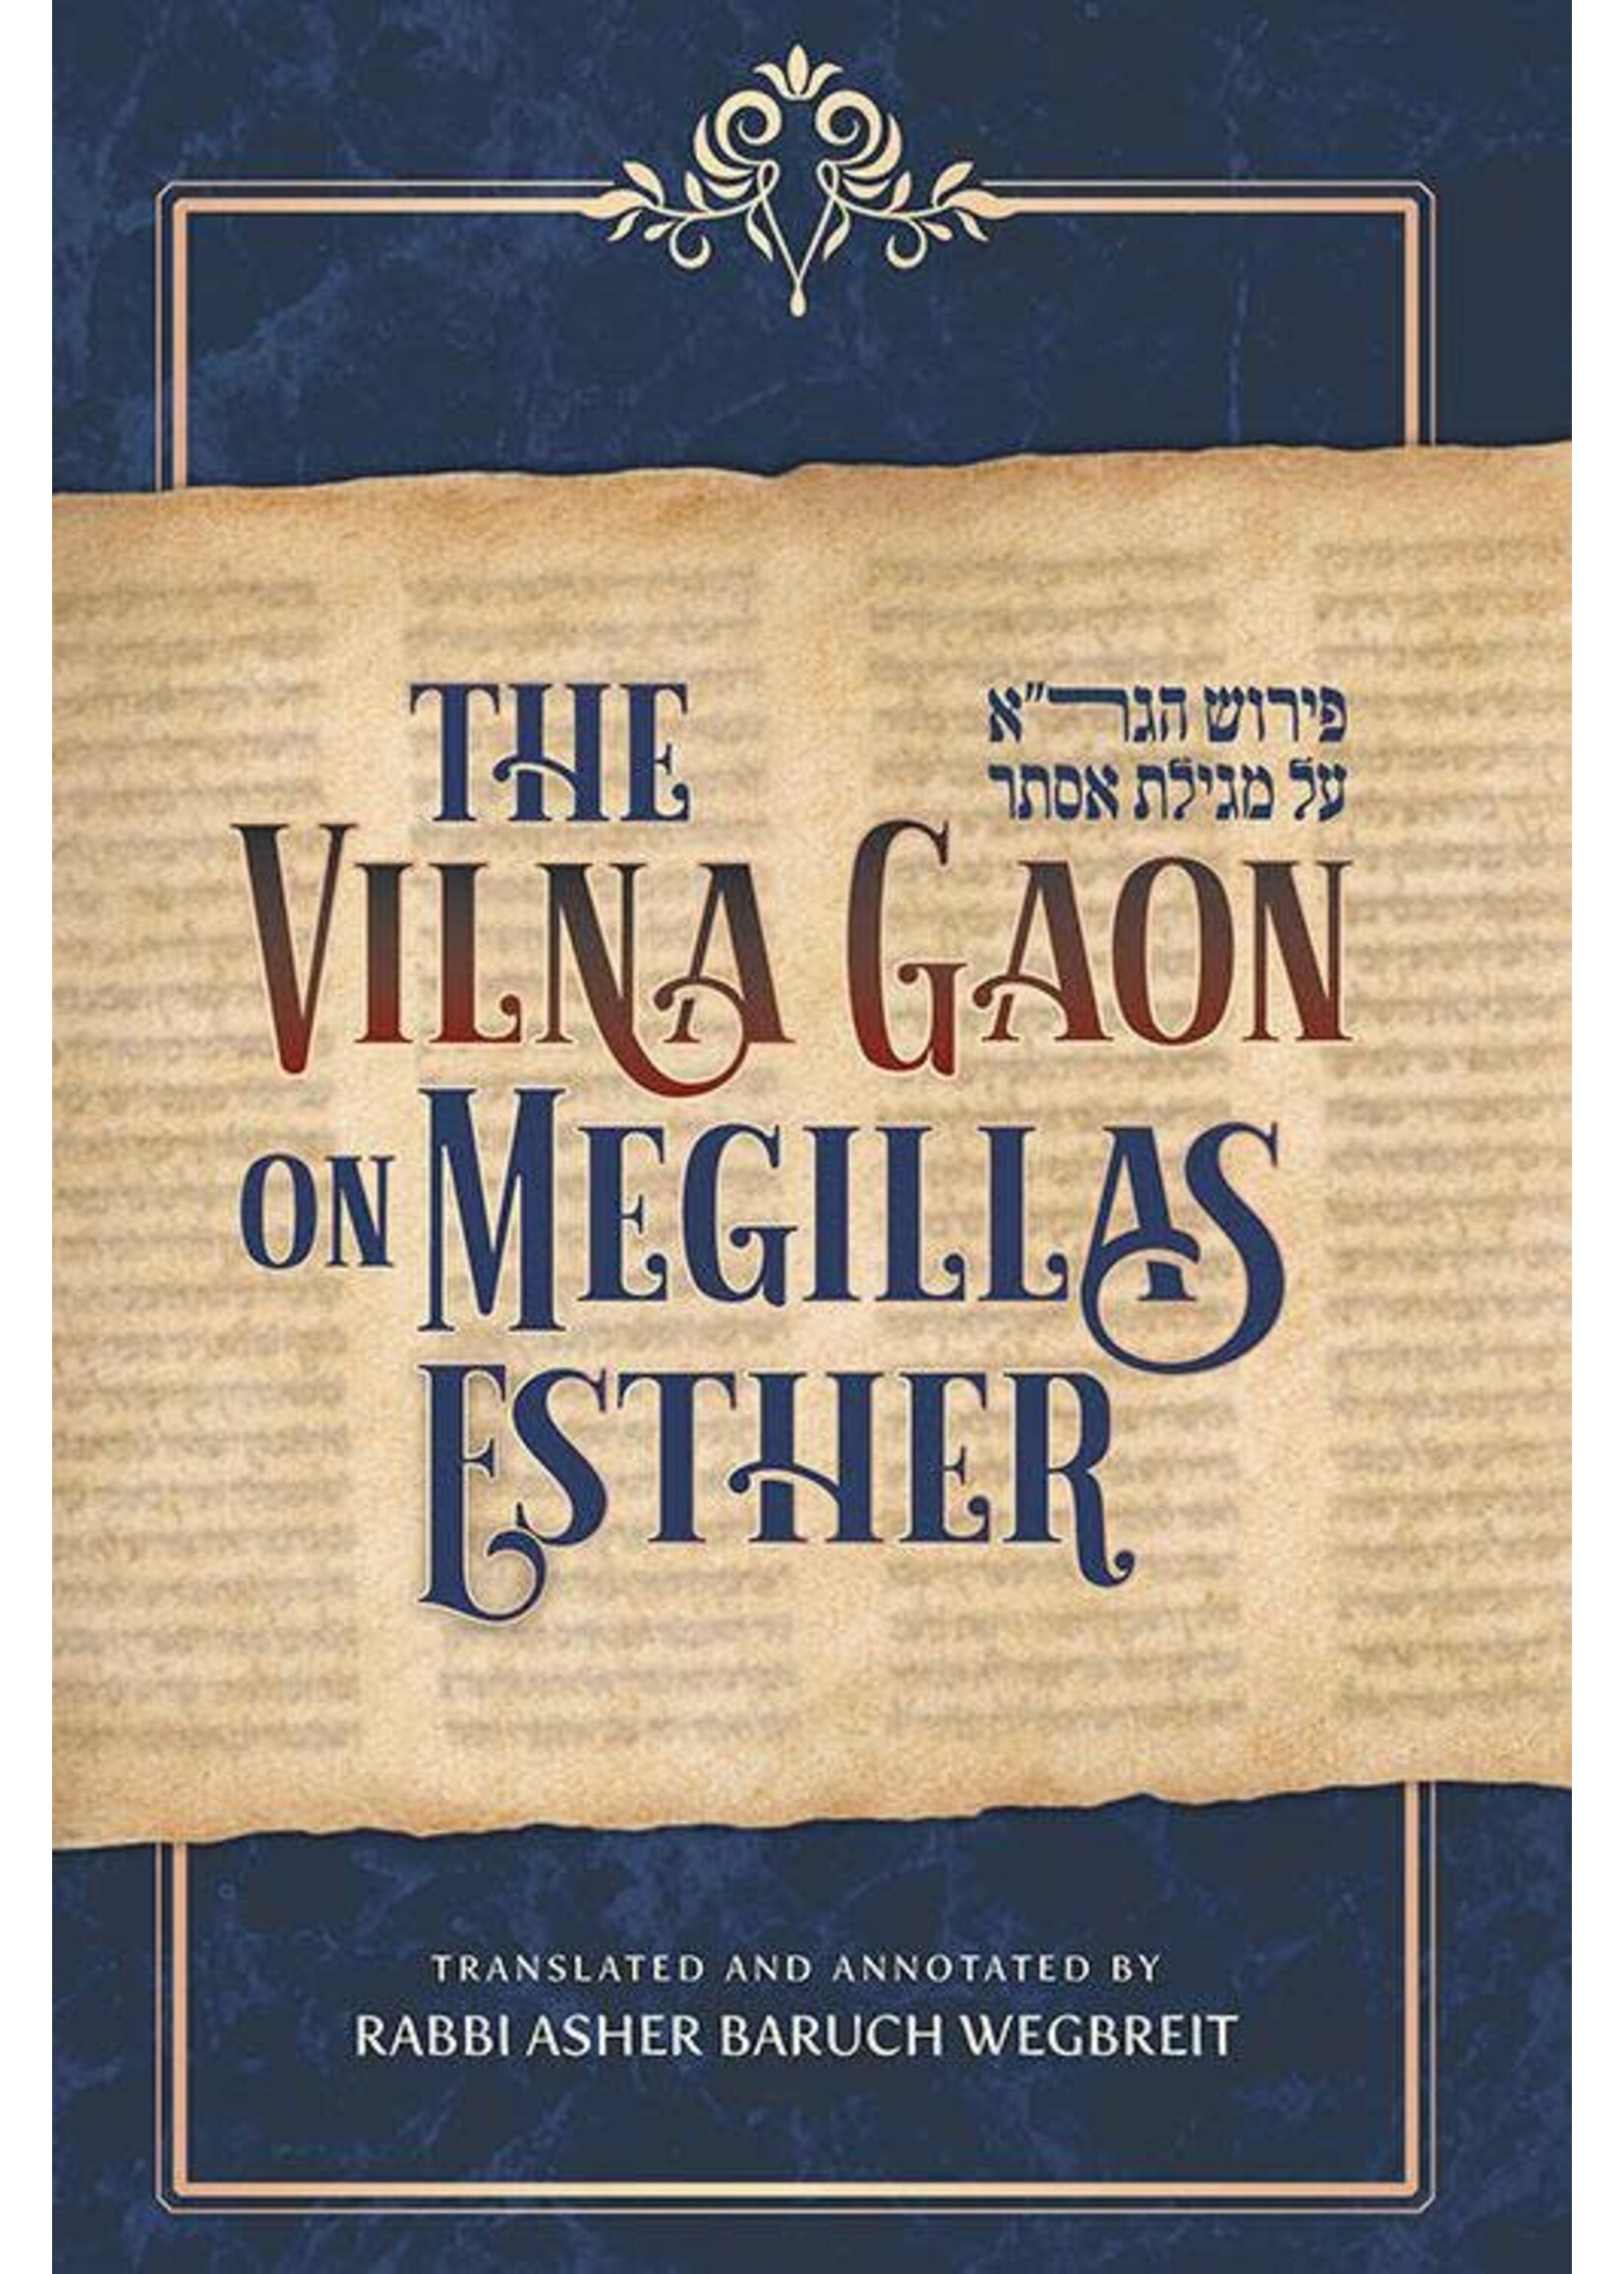 THE VILNA GAON ON MEGILLAS